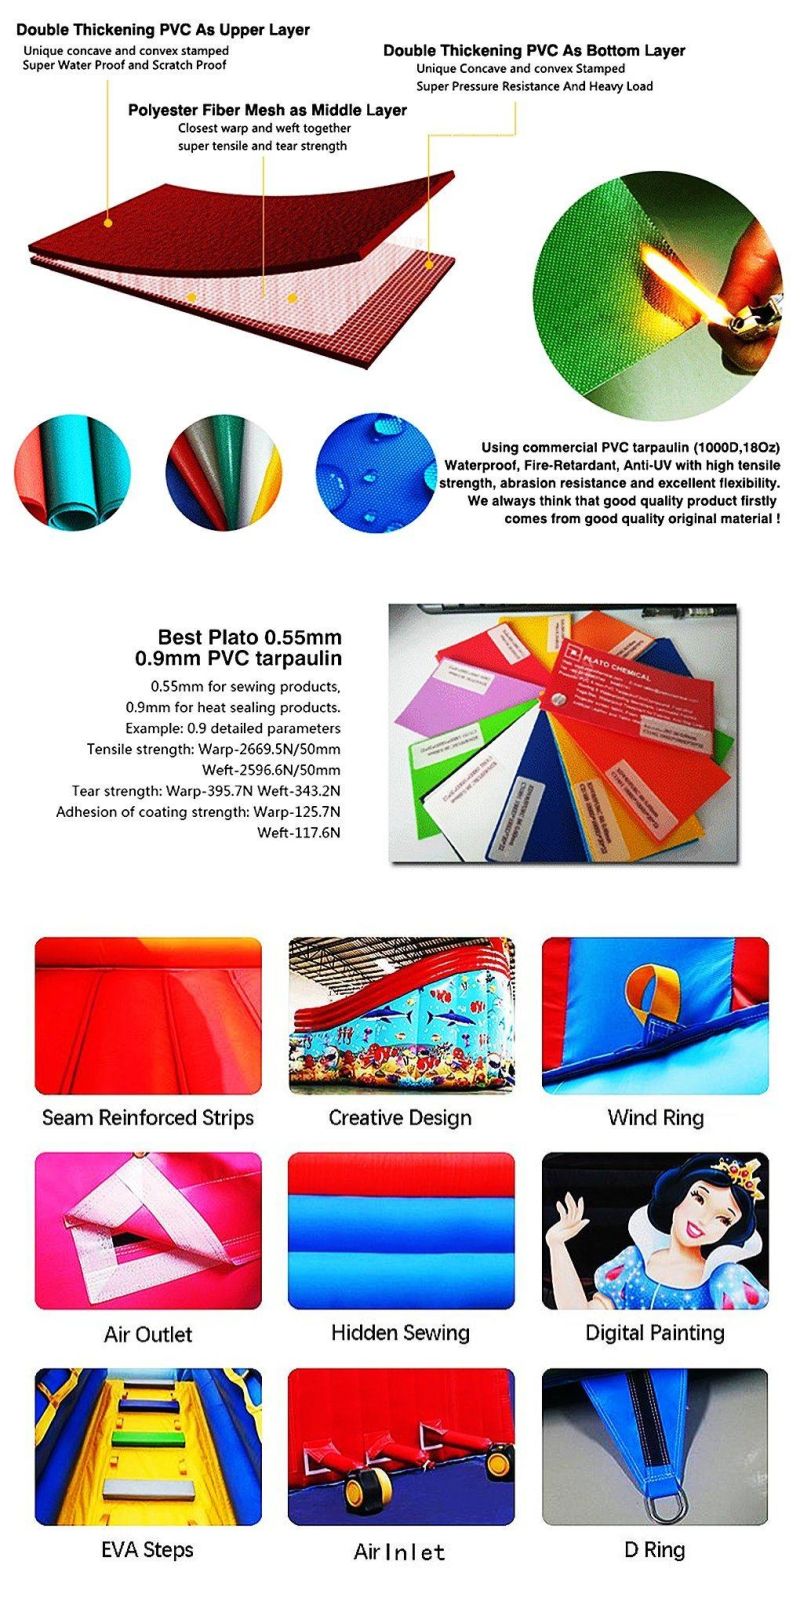 Good Quality PVC Kids Funworld Inflatables Bounce House Art Zoo Animal Bouncy Castle